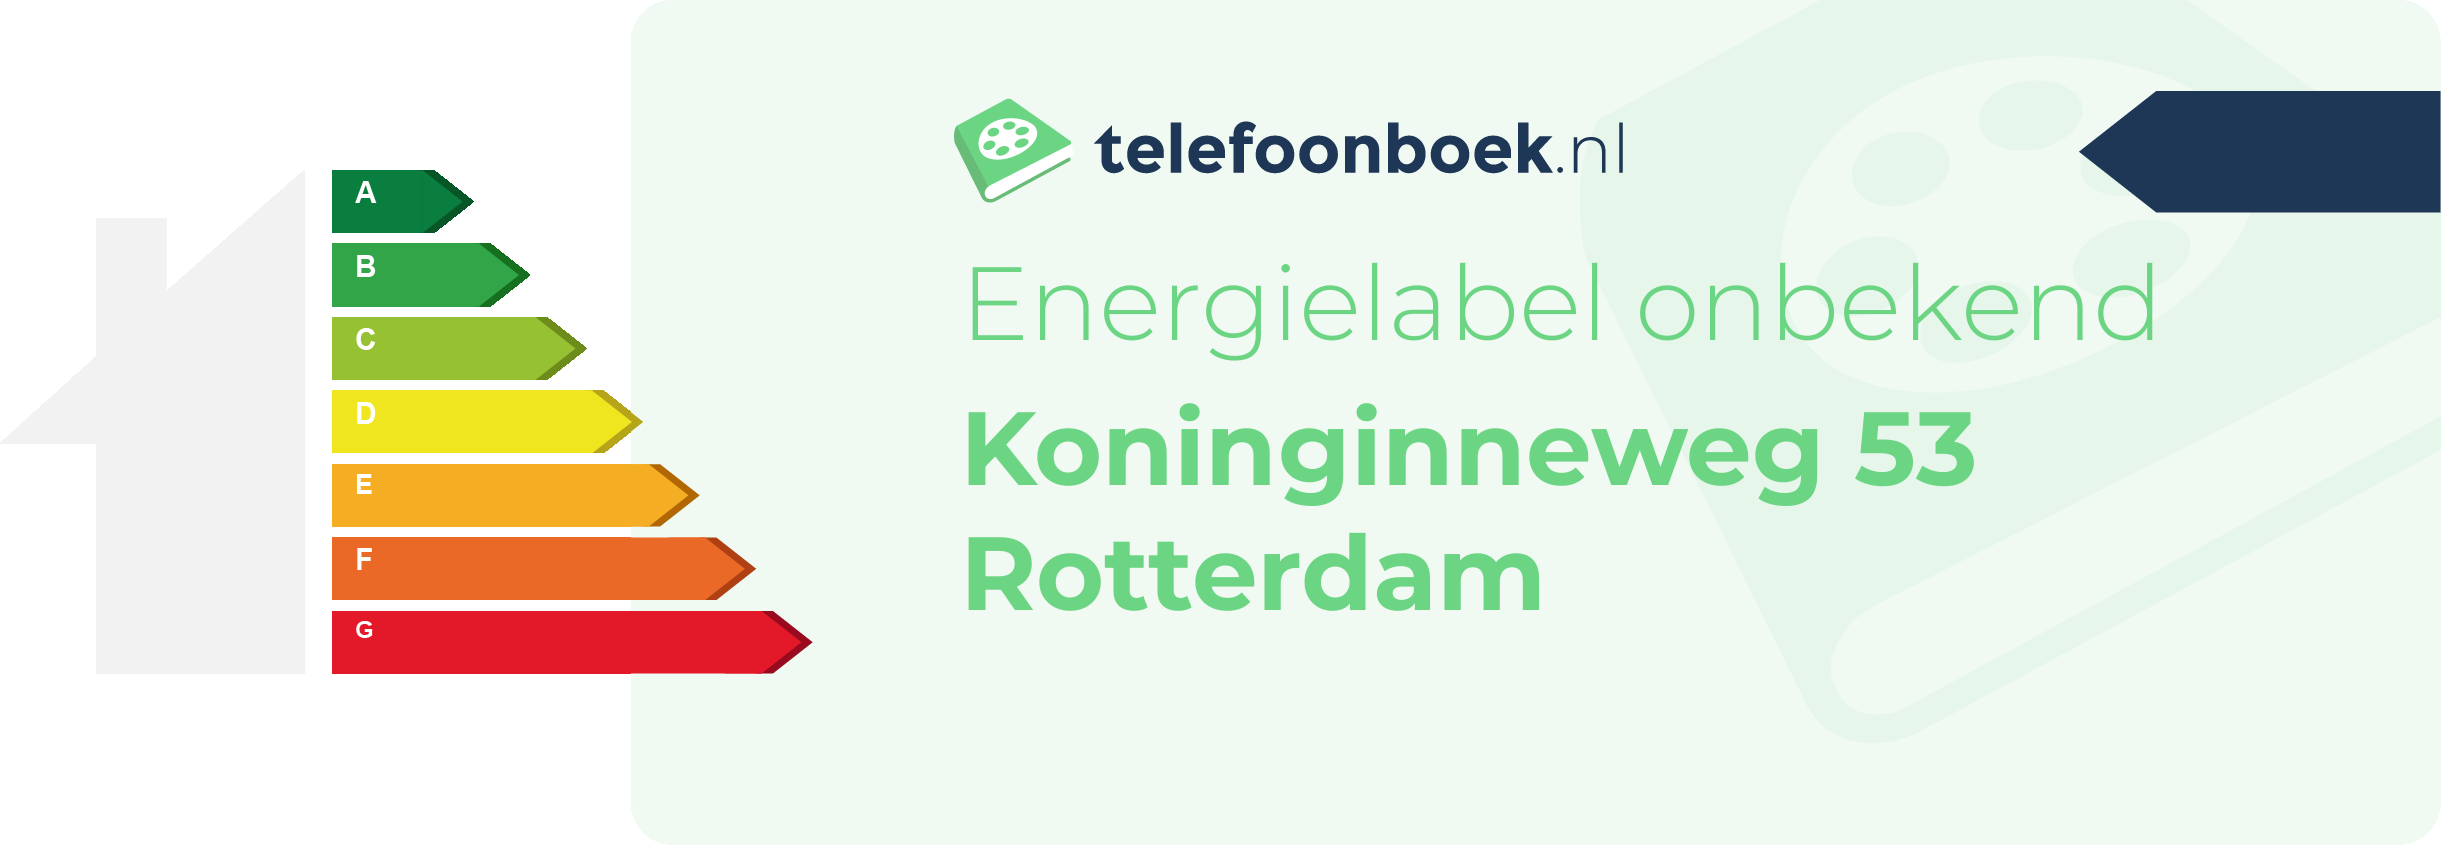 Energielabel Koninginneweg 53 Rotterdam